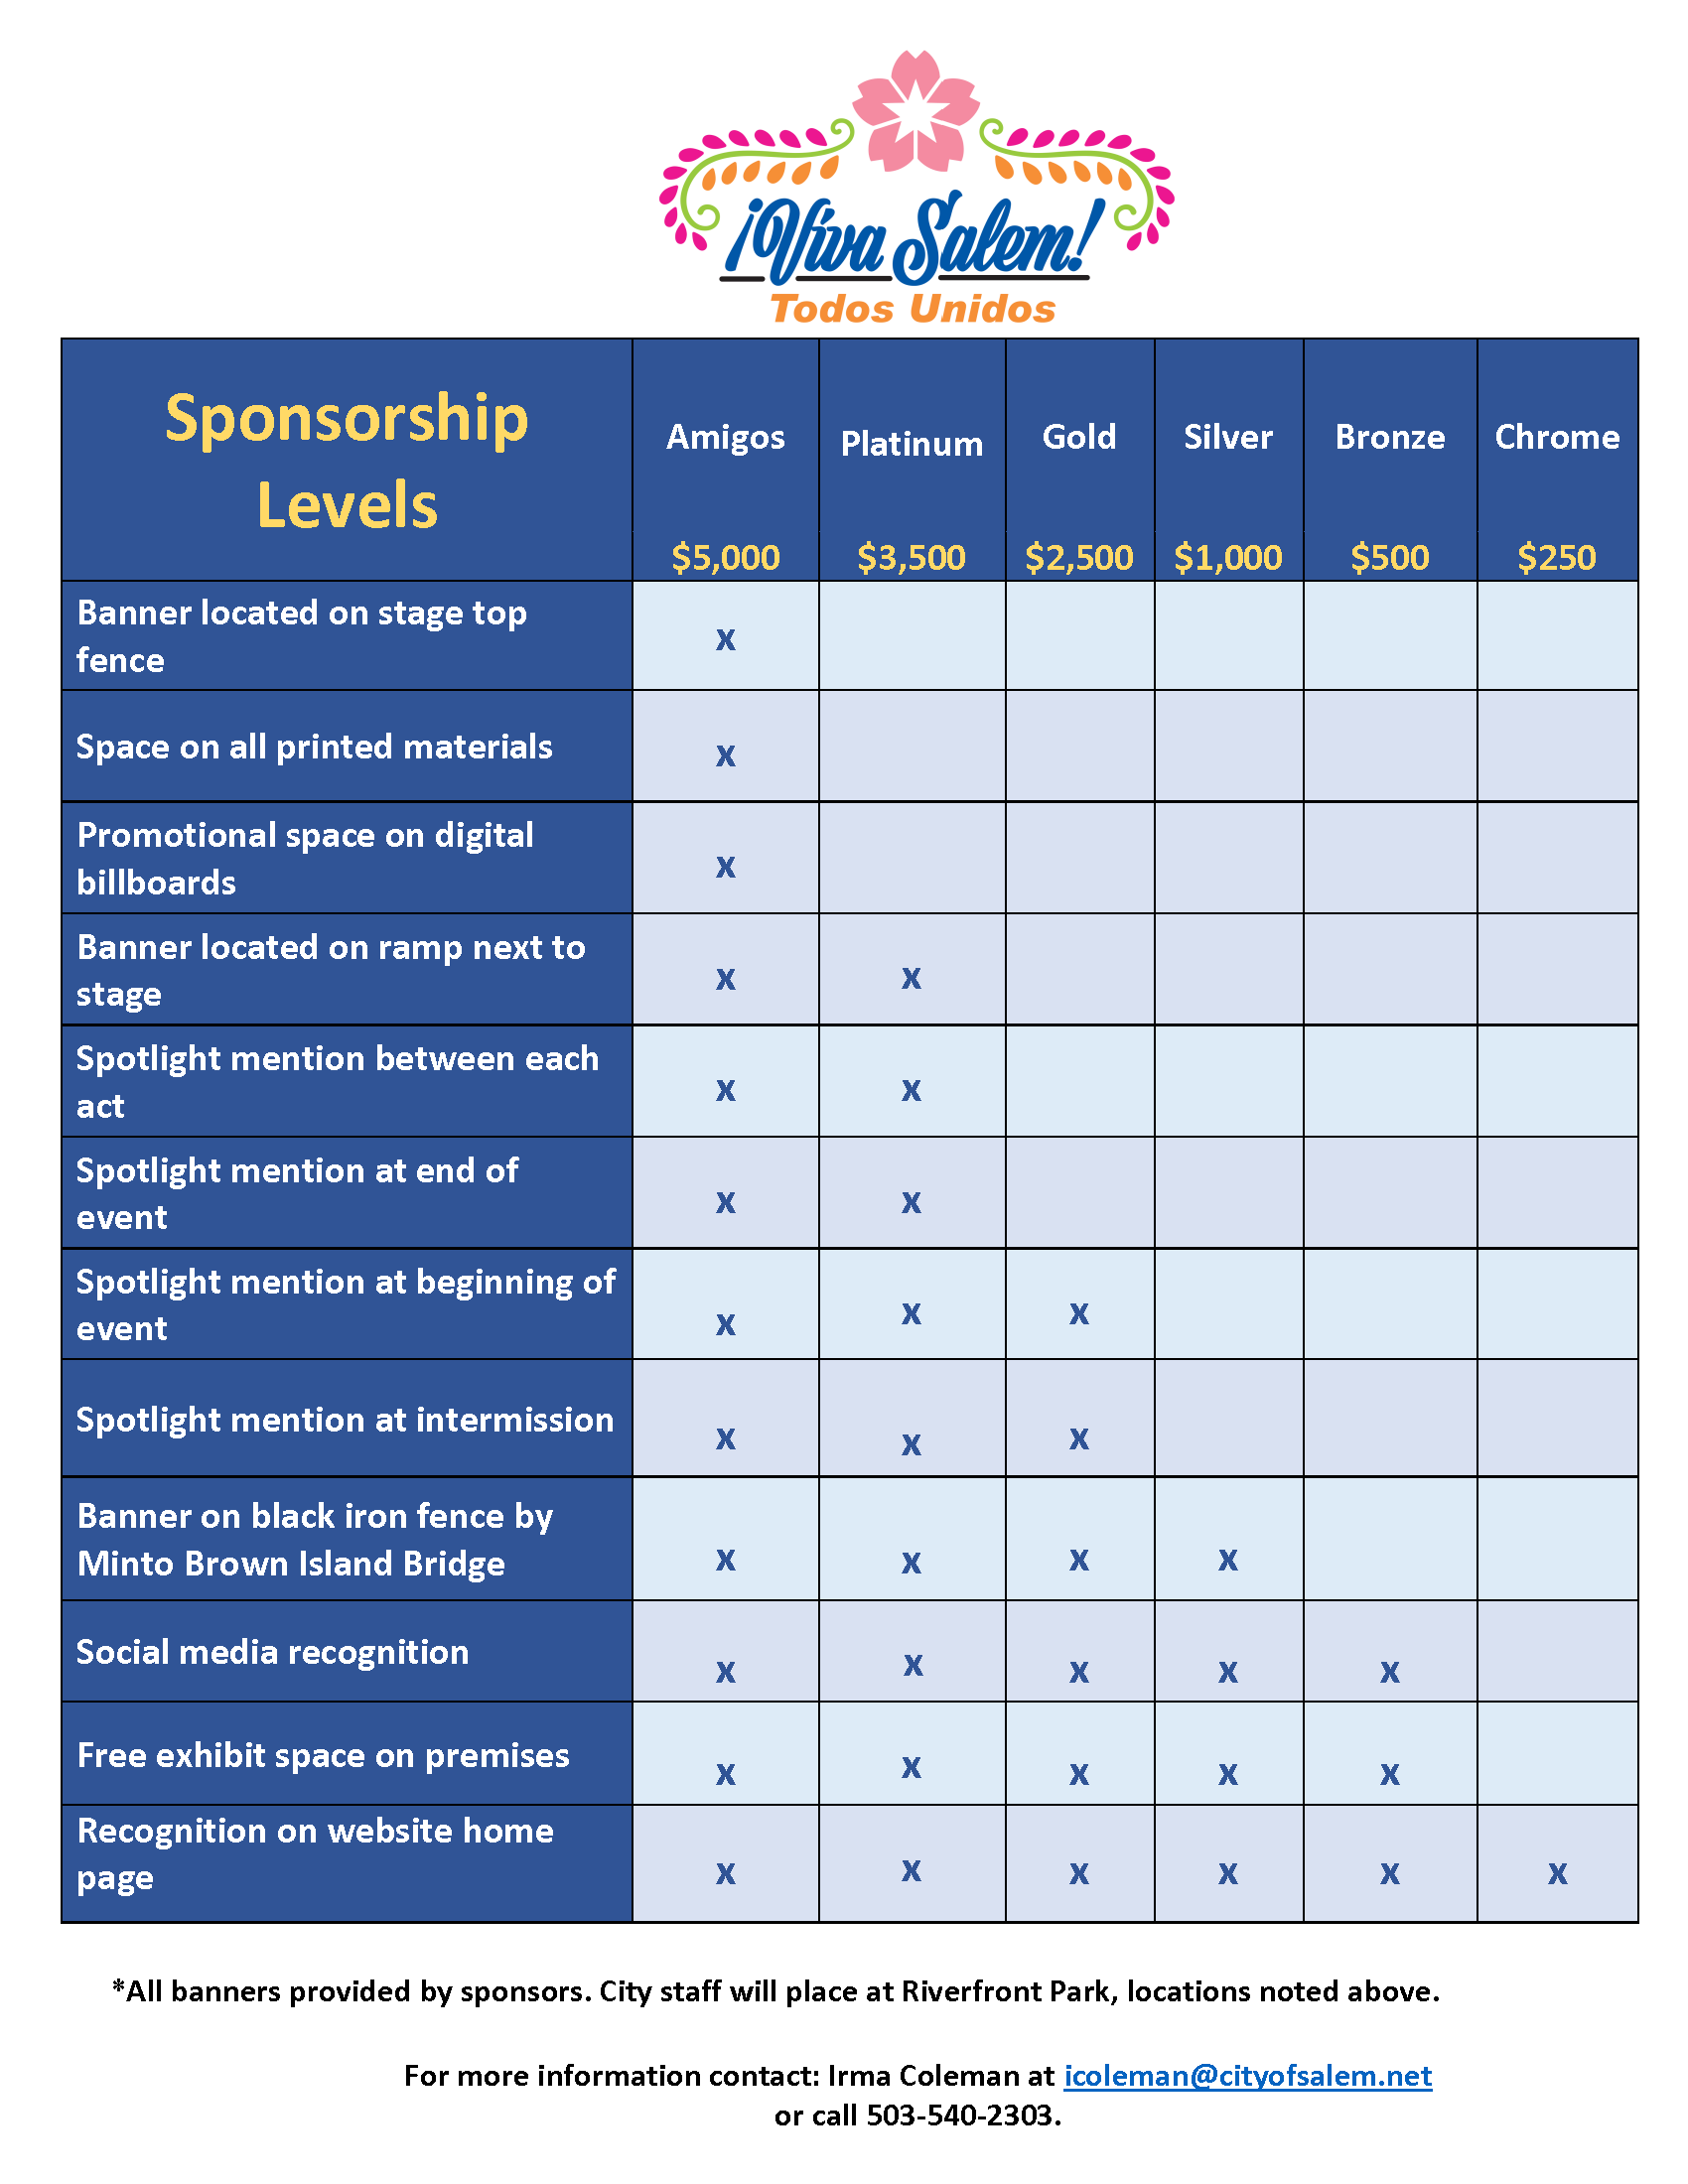 shows various sponsorship levels